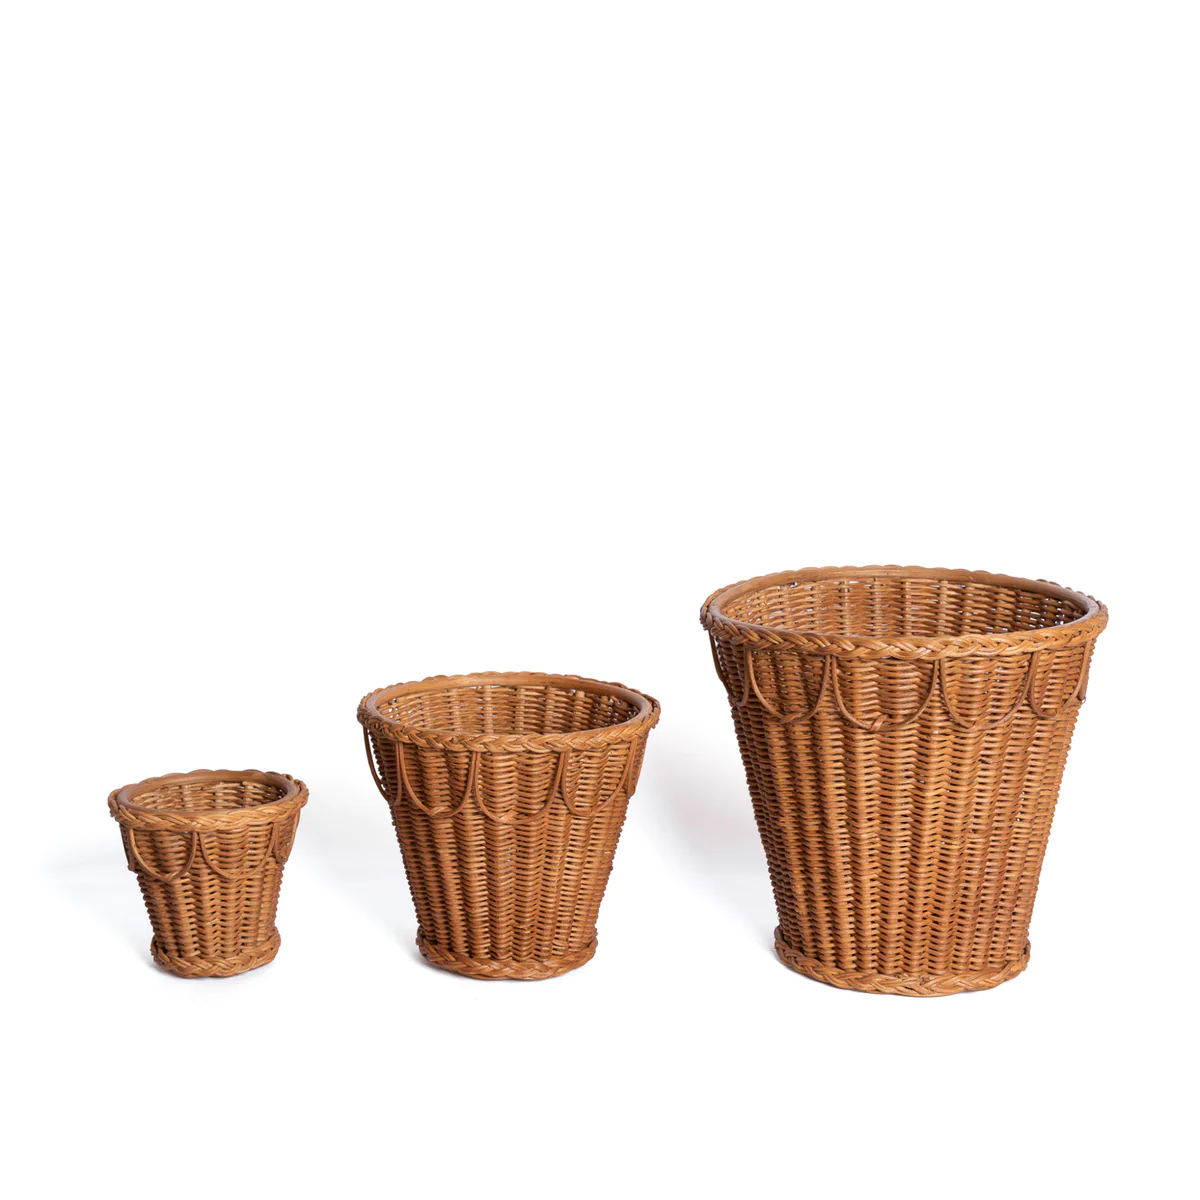 three wicker baskets sitting next to each other